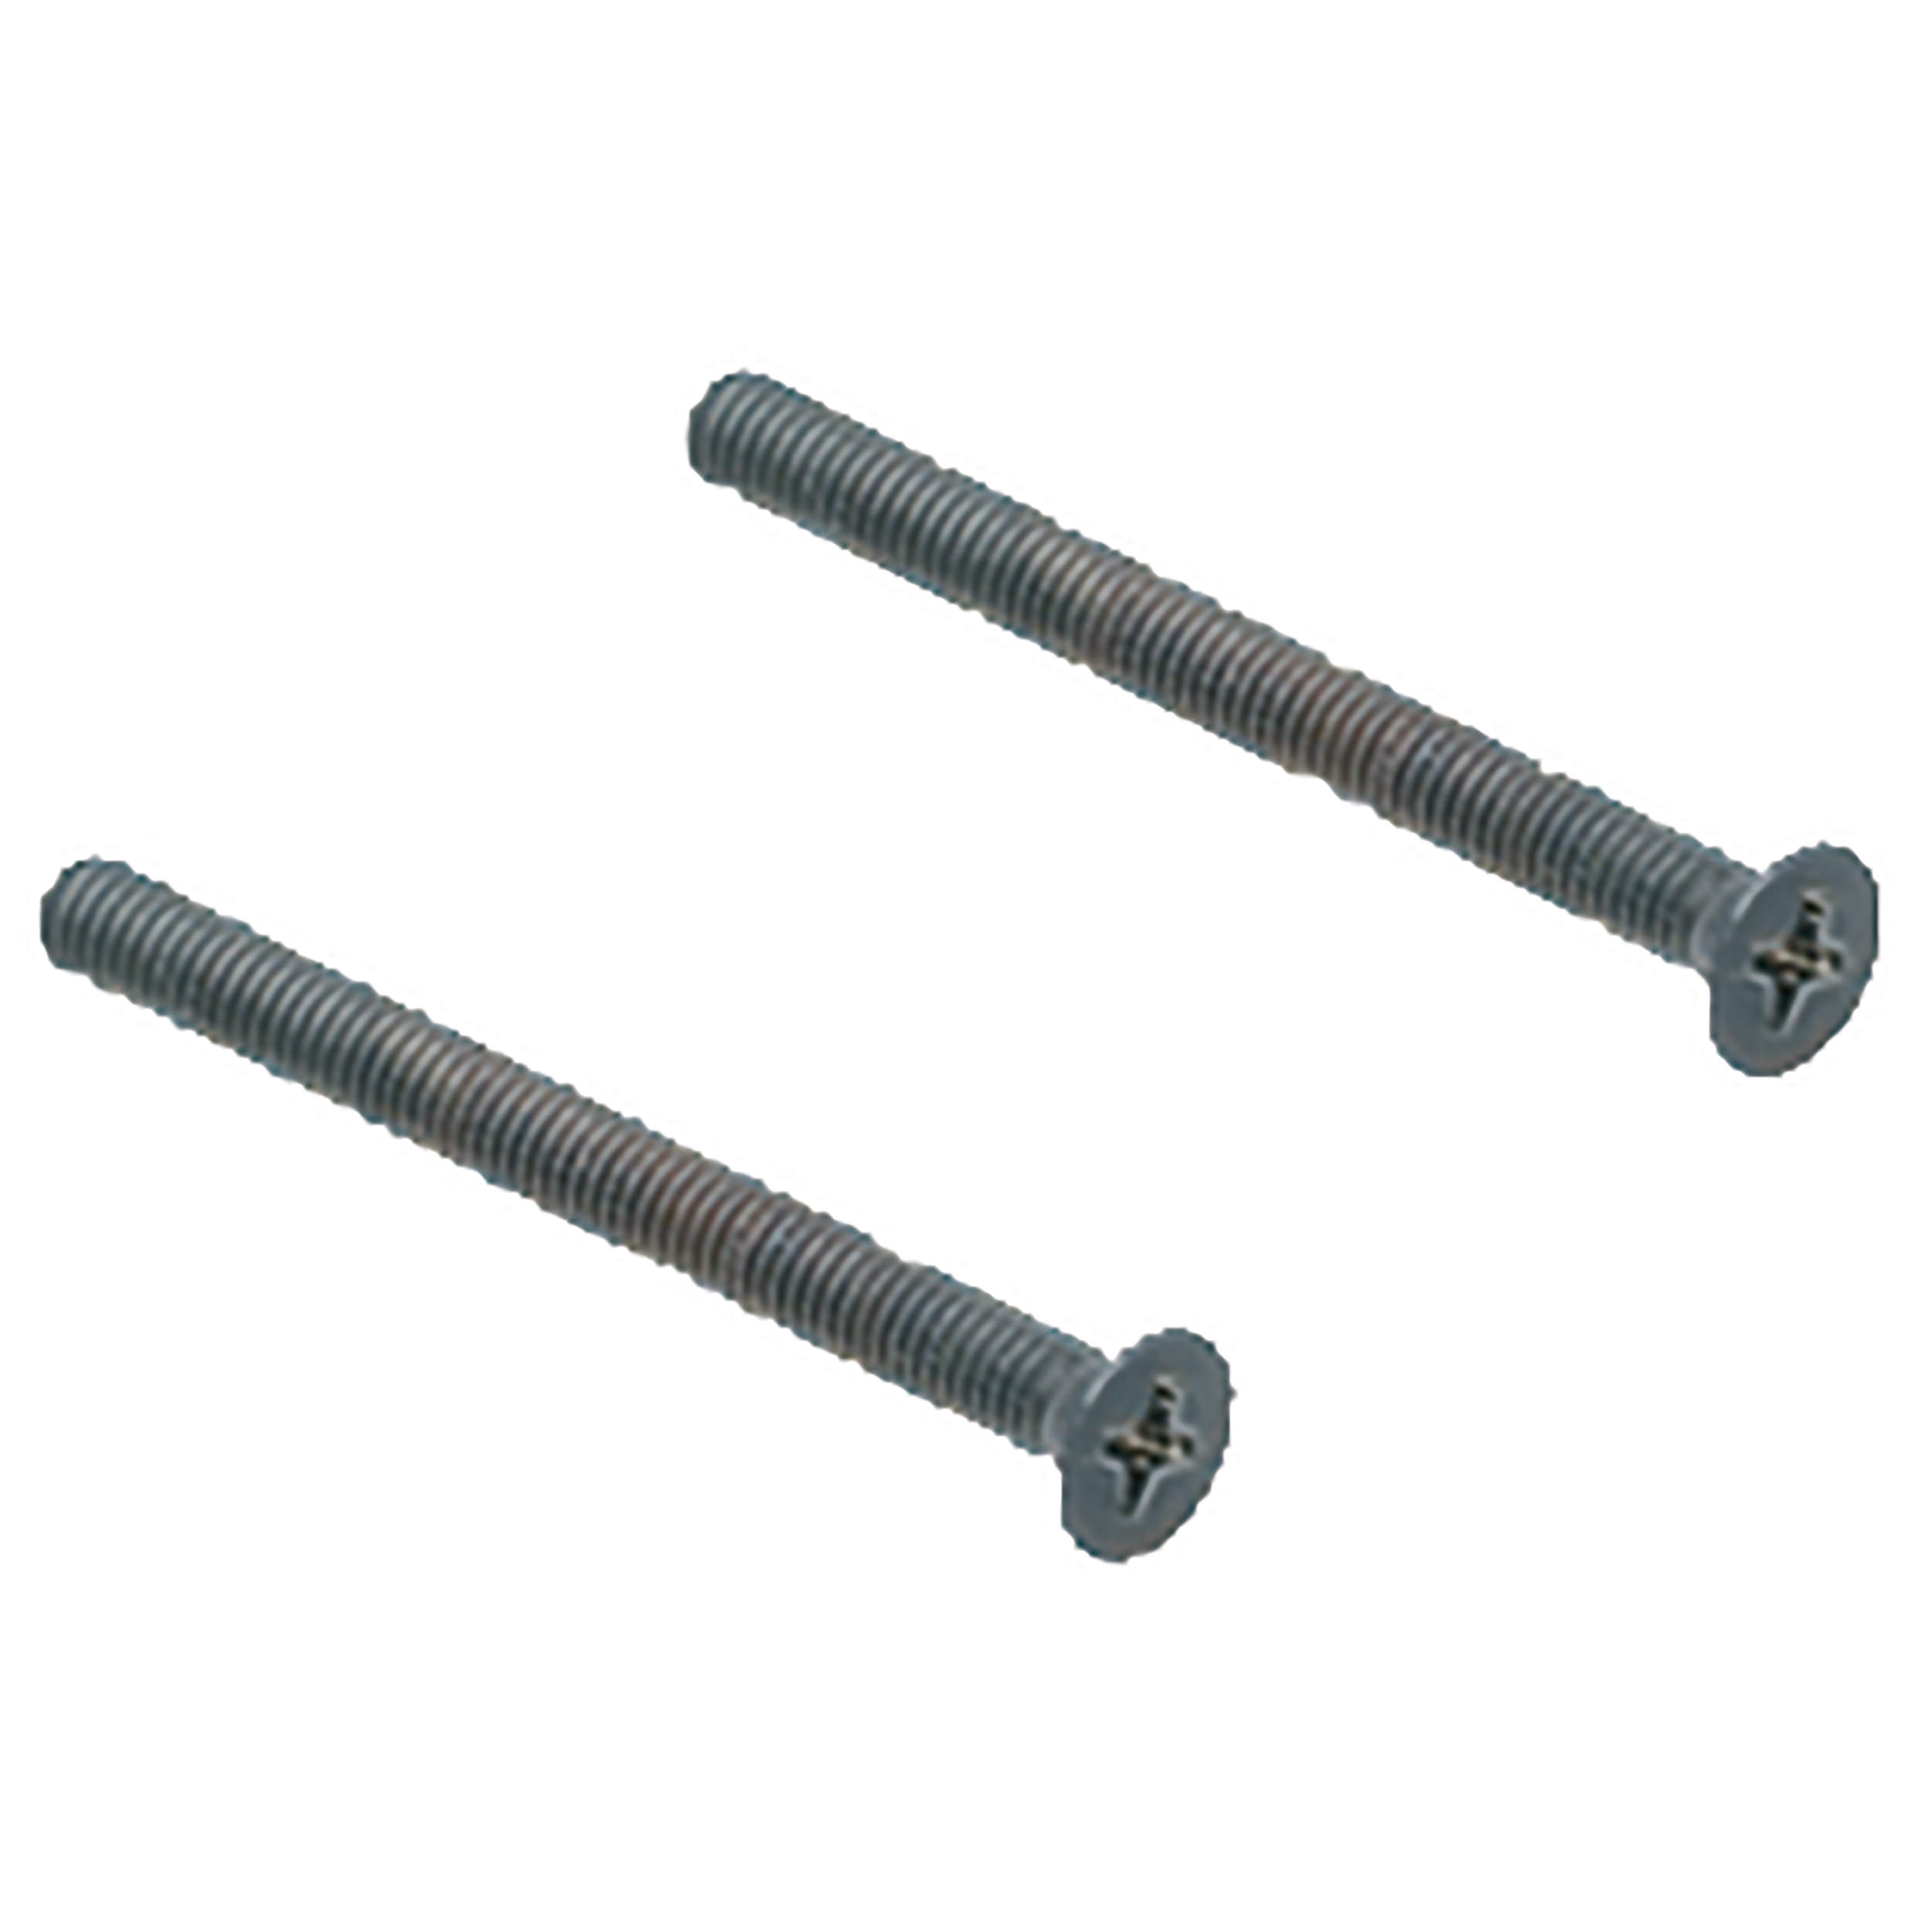 Fastening screws (2-piece Set), series variobloc